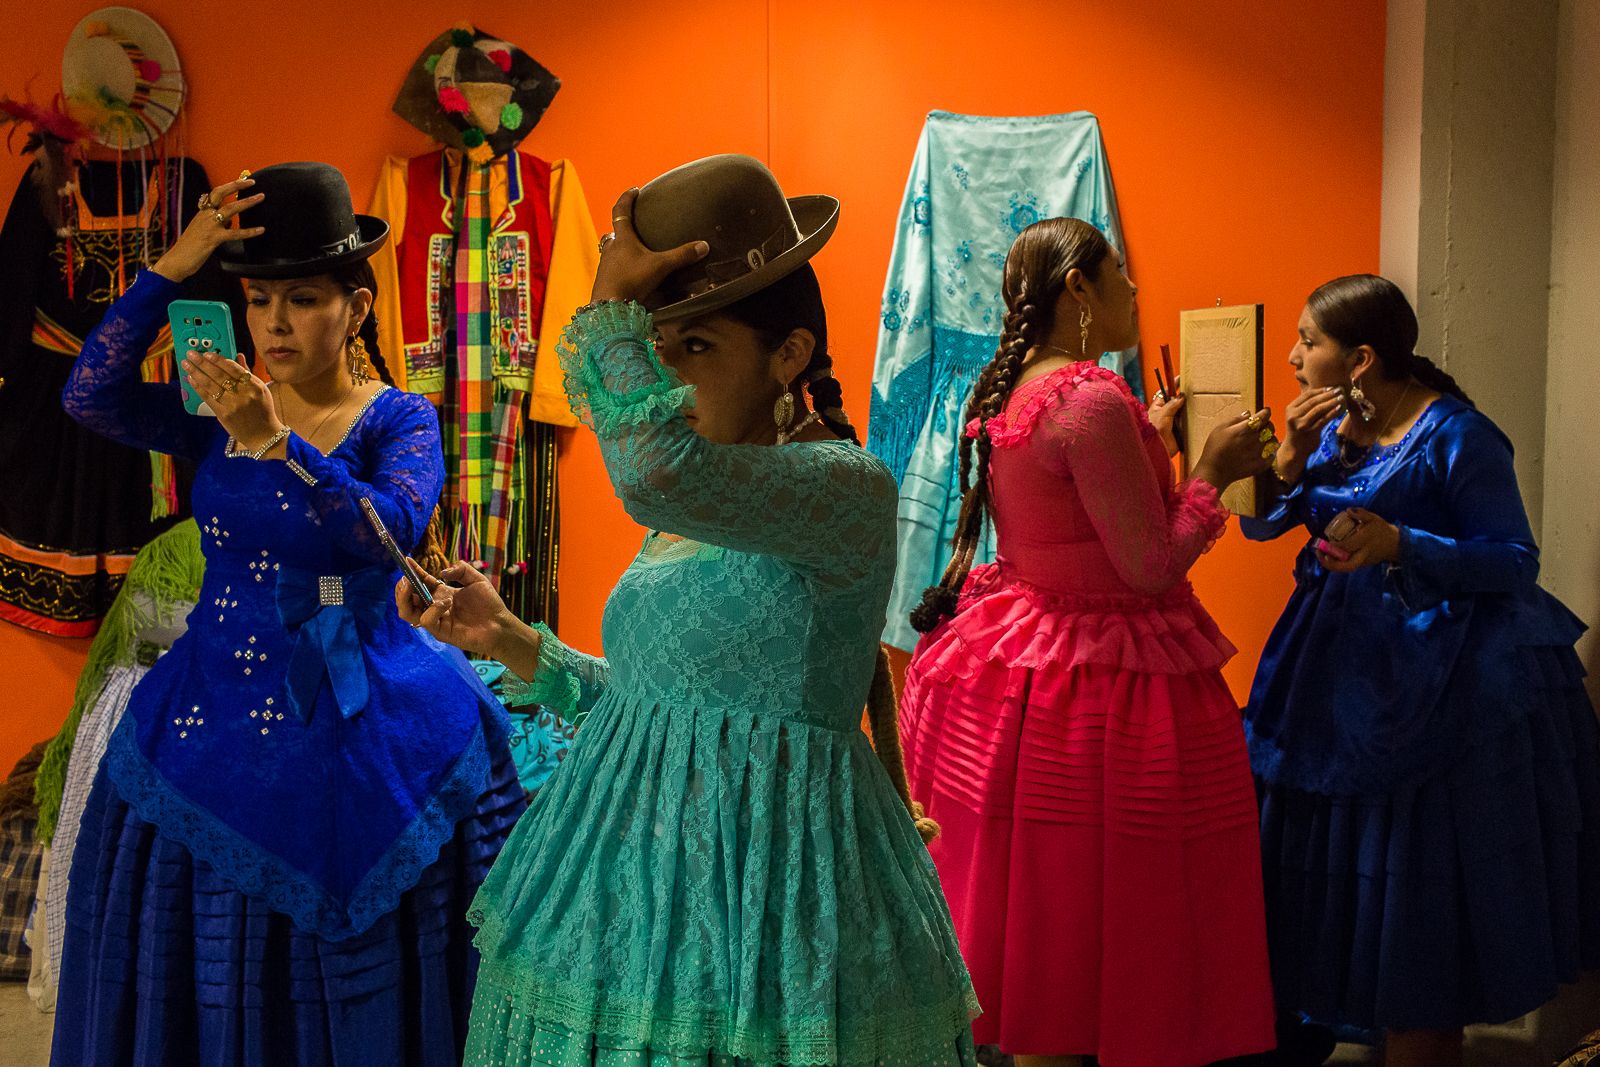 © Eduardo Leal - Cholitas prepare themselves backstage before ascending the catwalk at a fashion show in El Alto.